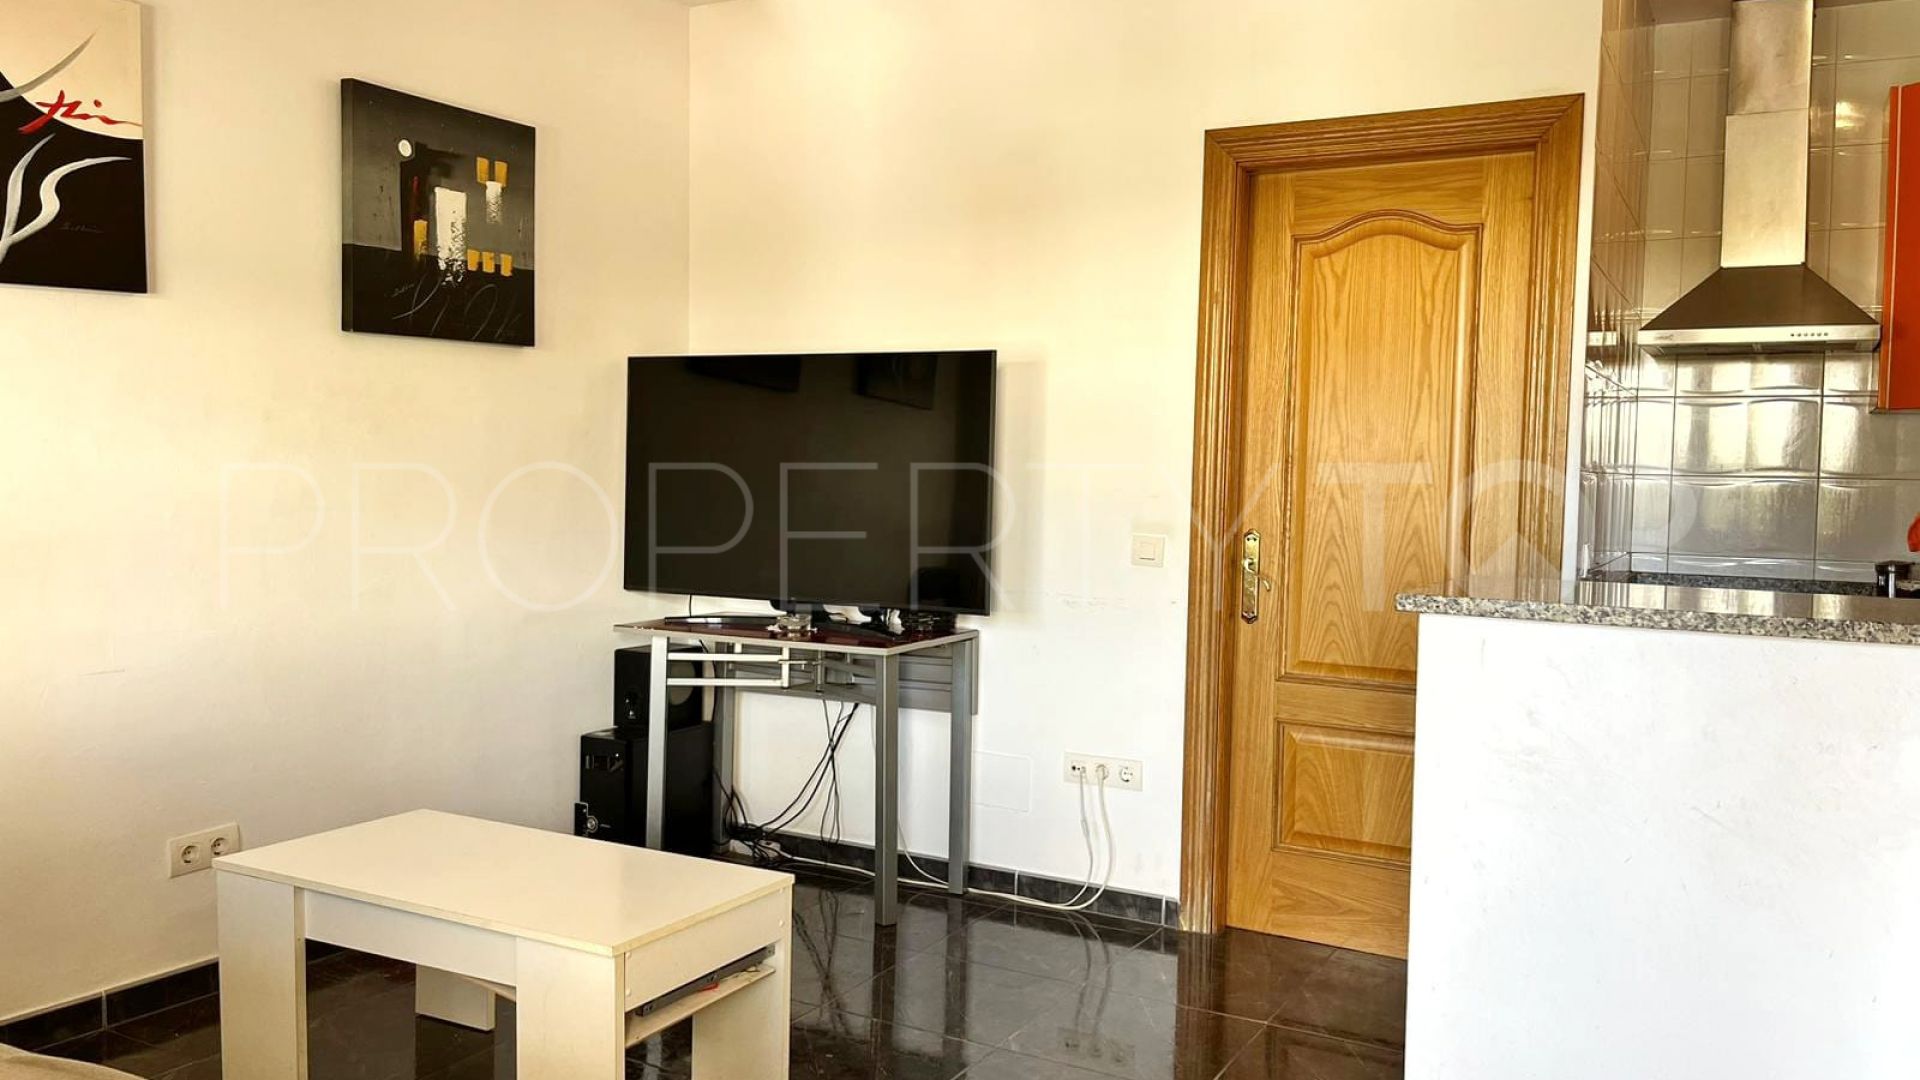 Ground floor apartment with 1 bedroom for sale in Benalmadena Costa